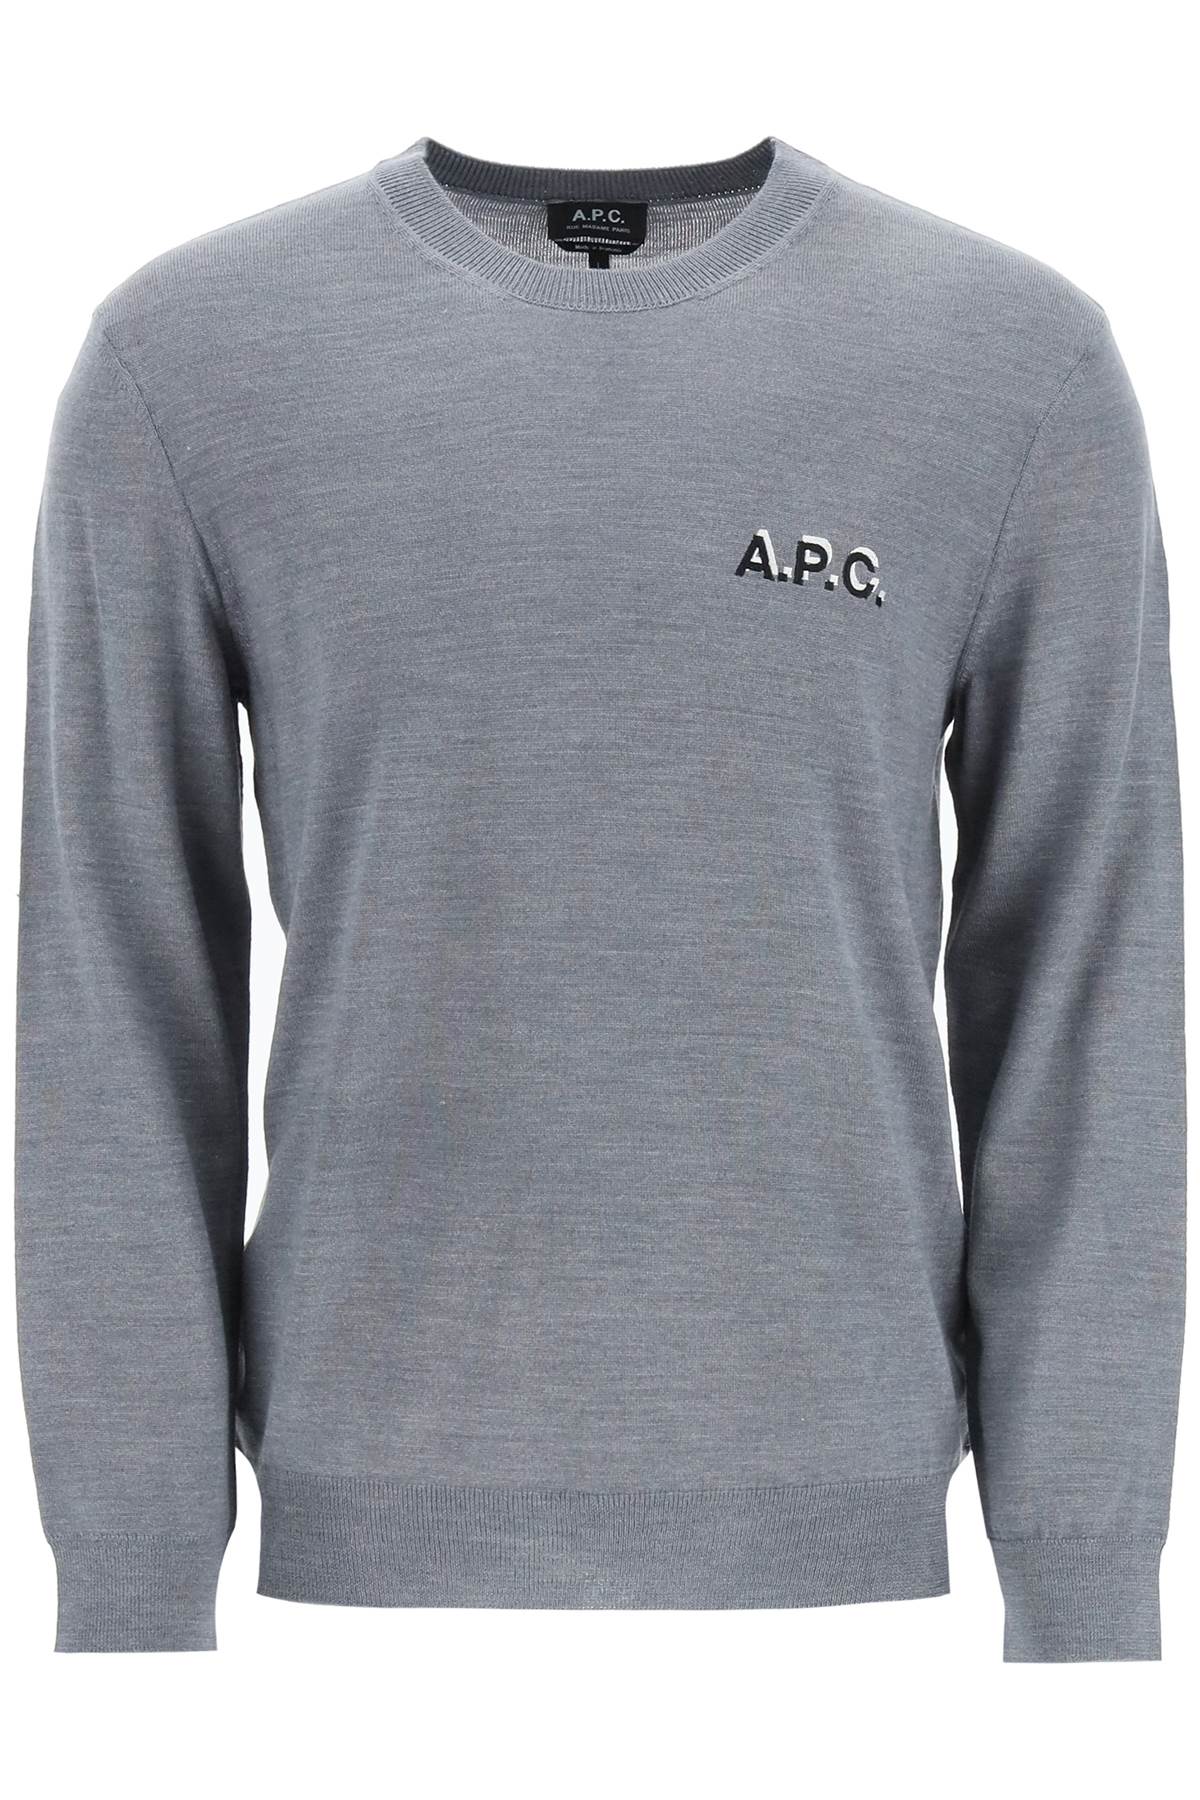 A.P.C. brian Crew-neck Sweater